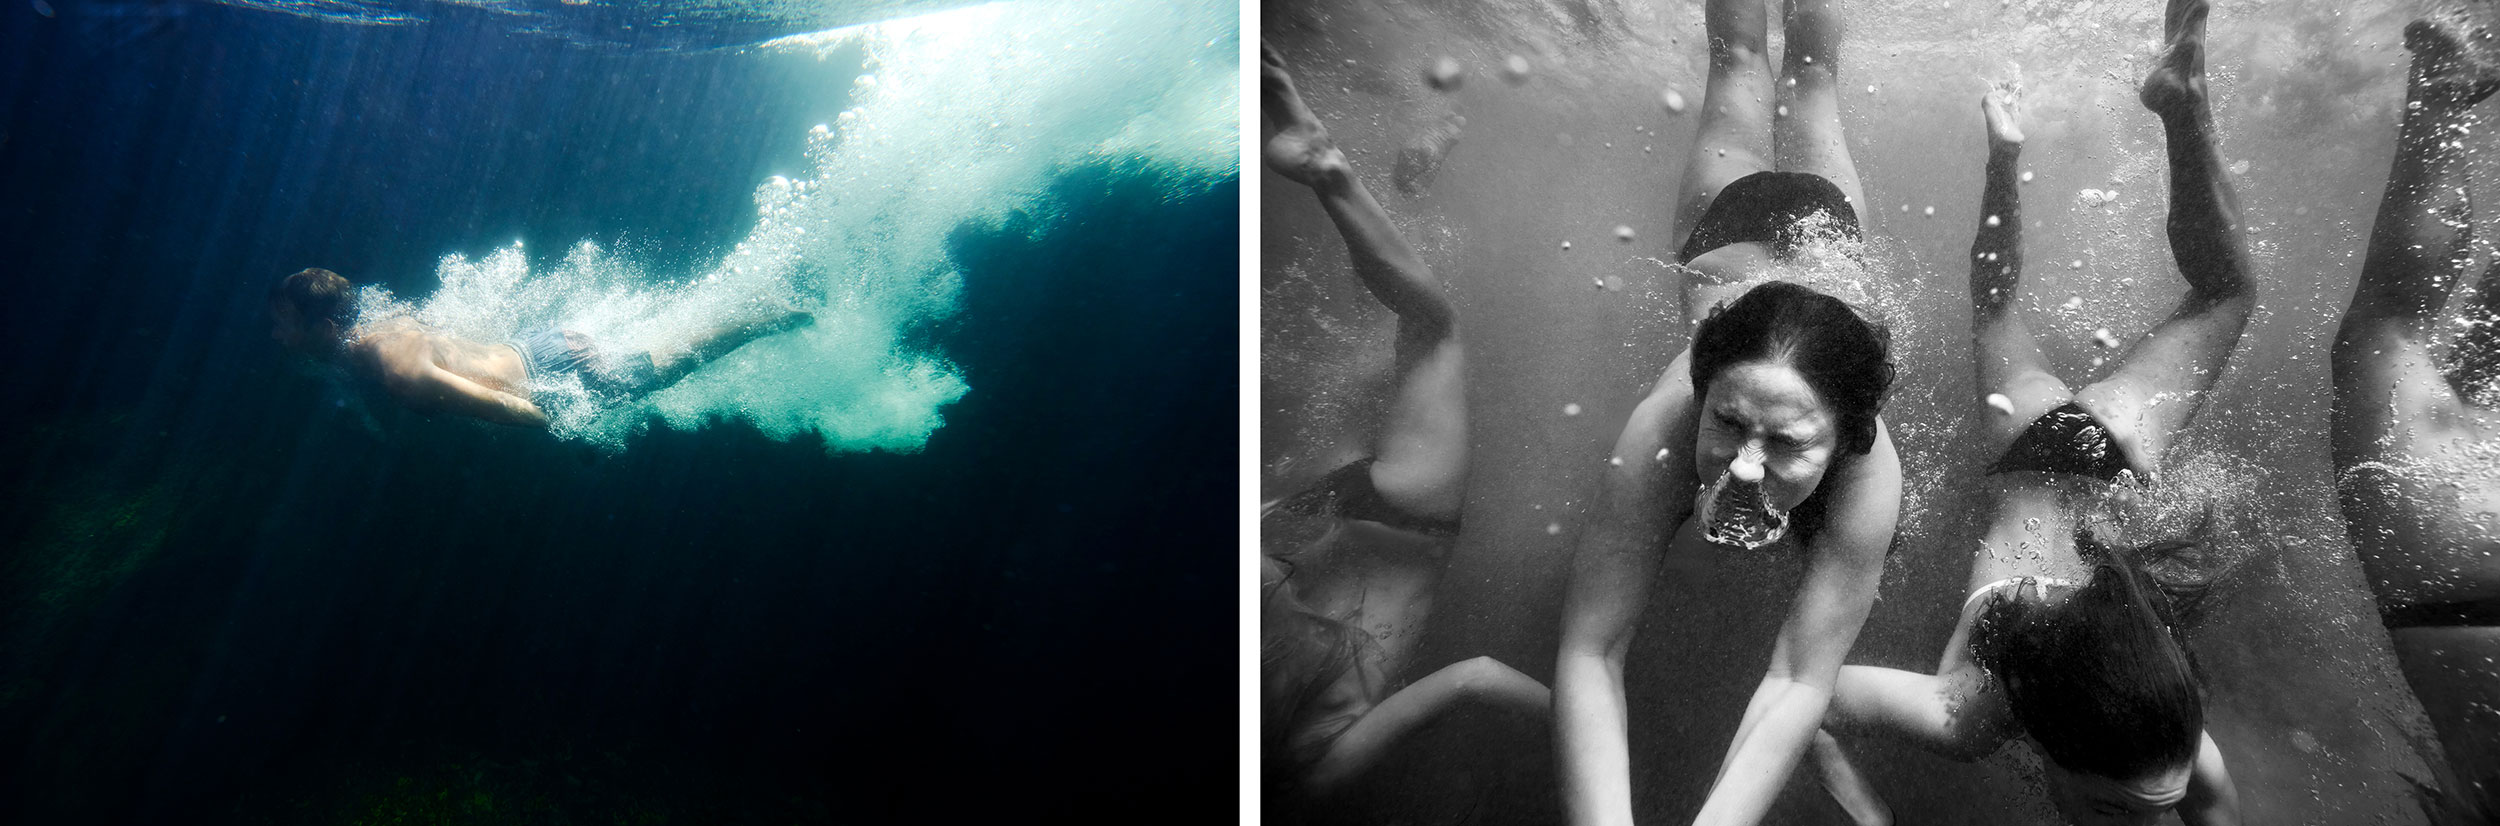 underwater-dive-babuljak-pair